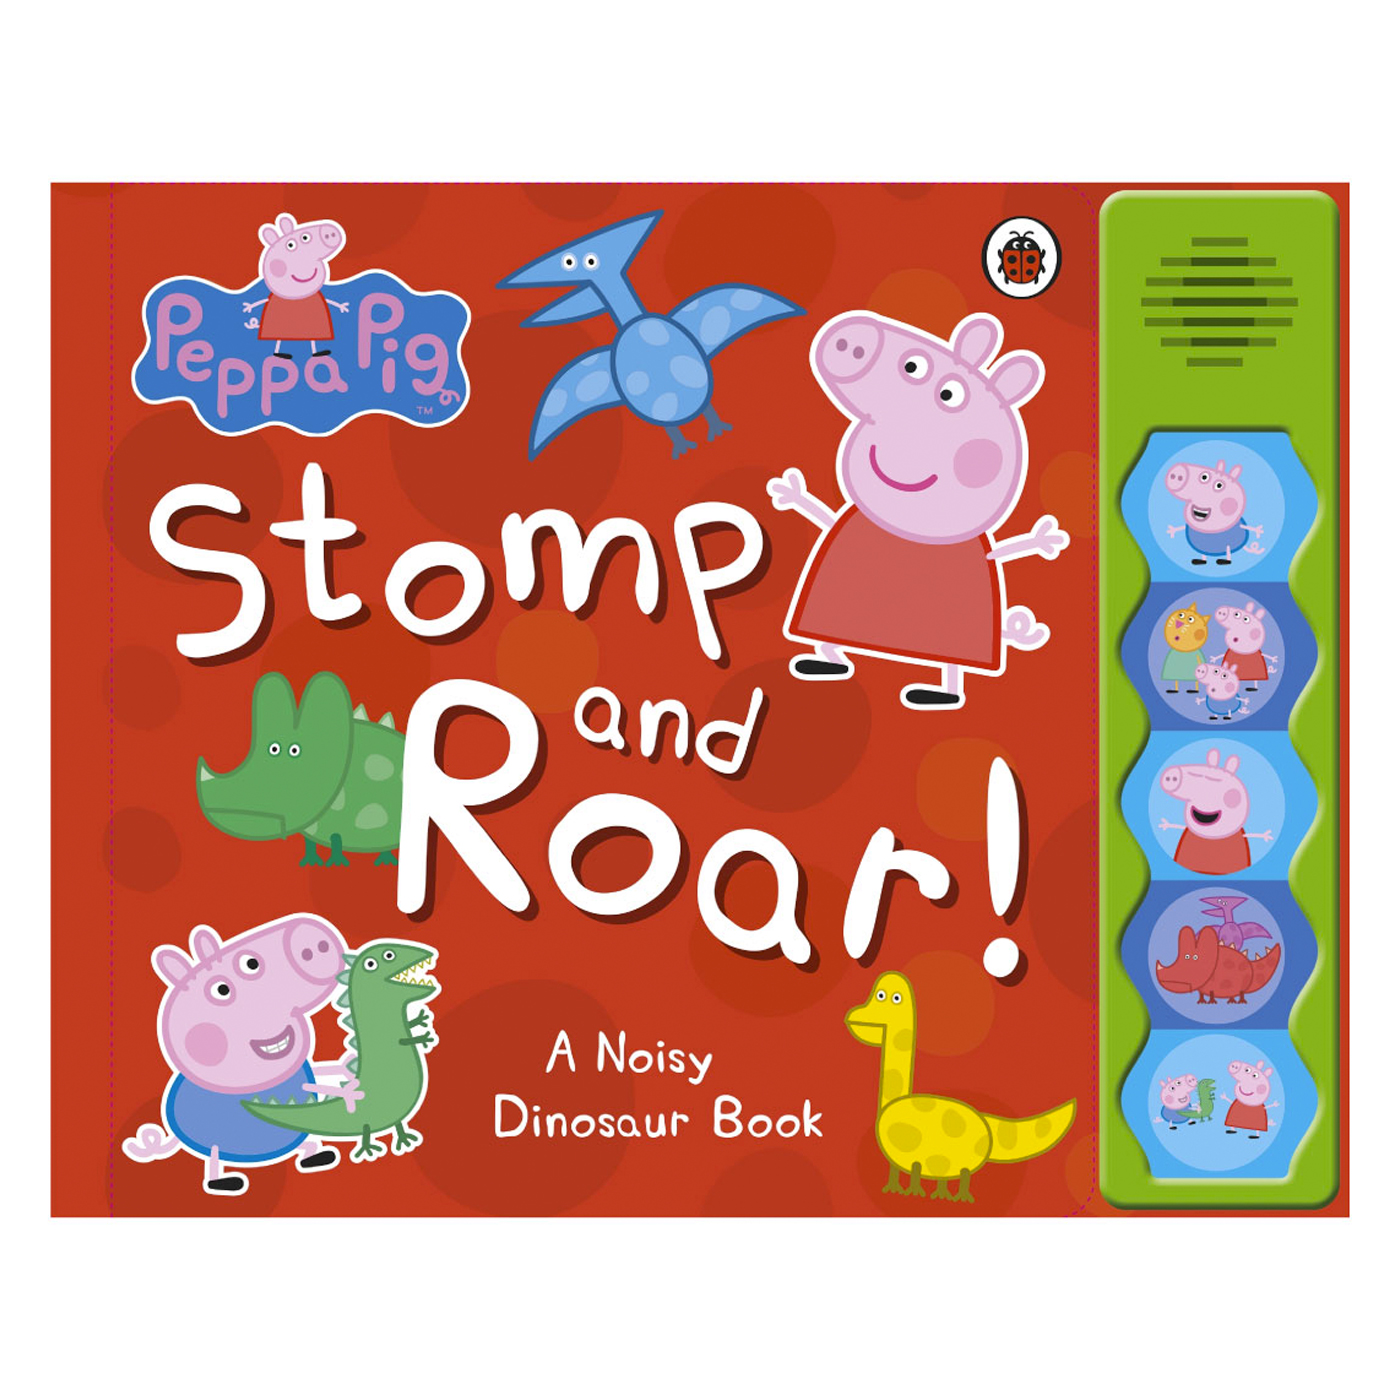 LADYBIRD Peppa Pig: Stomp and Roar!